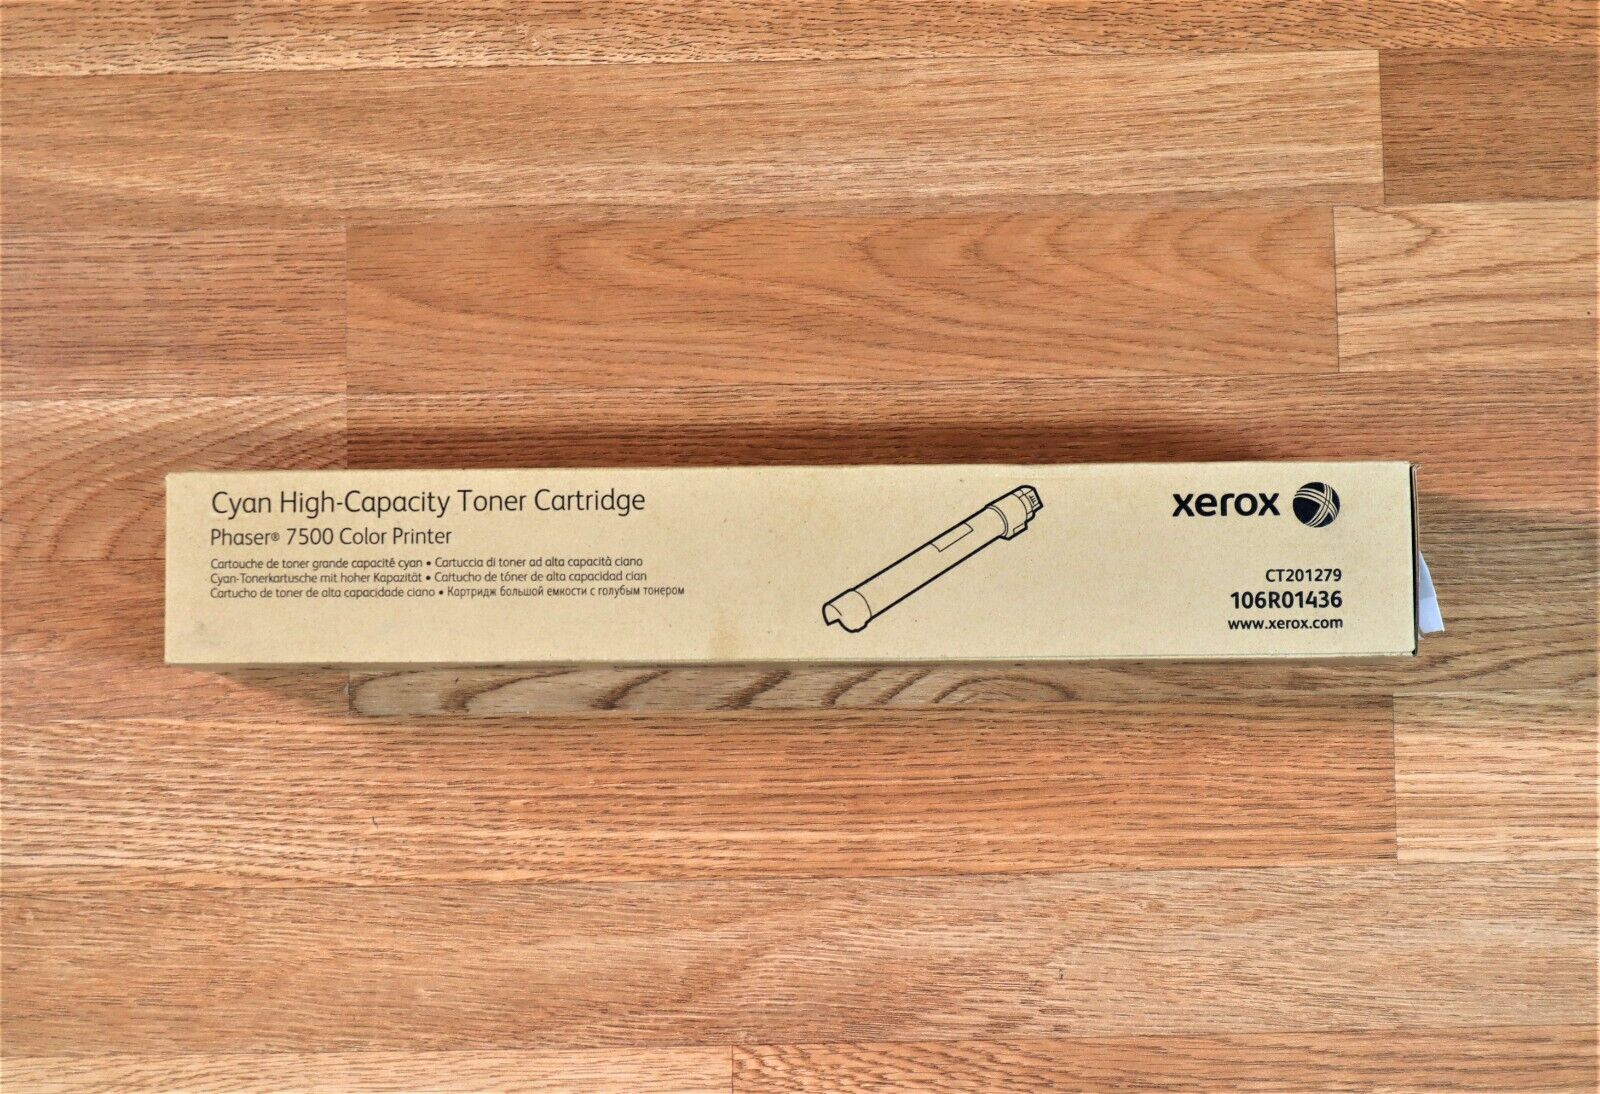 Xerox Phaser 7500 Cyan High Capacity Toner Cartridge 106R01436 For 7500 7500DN - copier-clearance-center